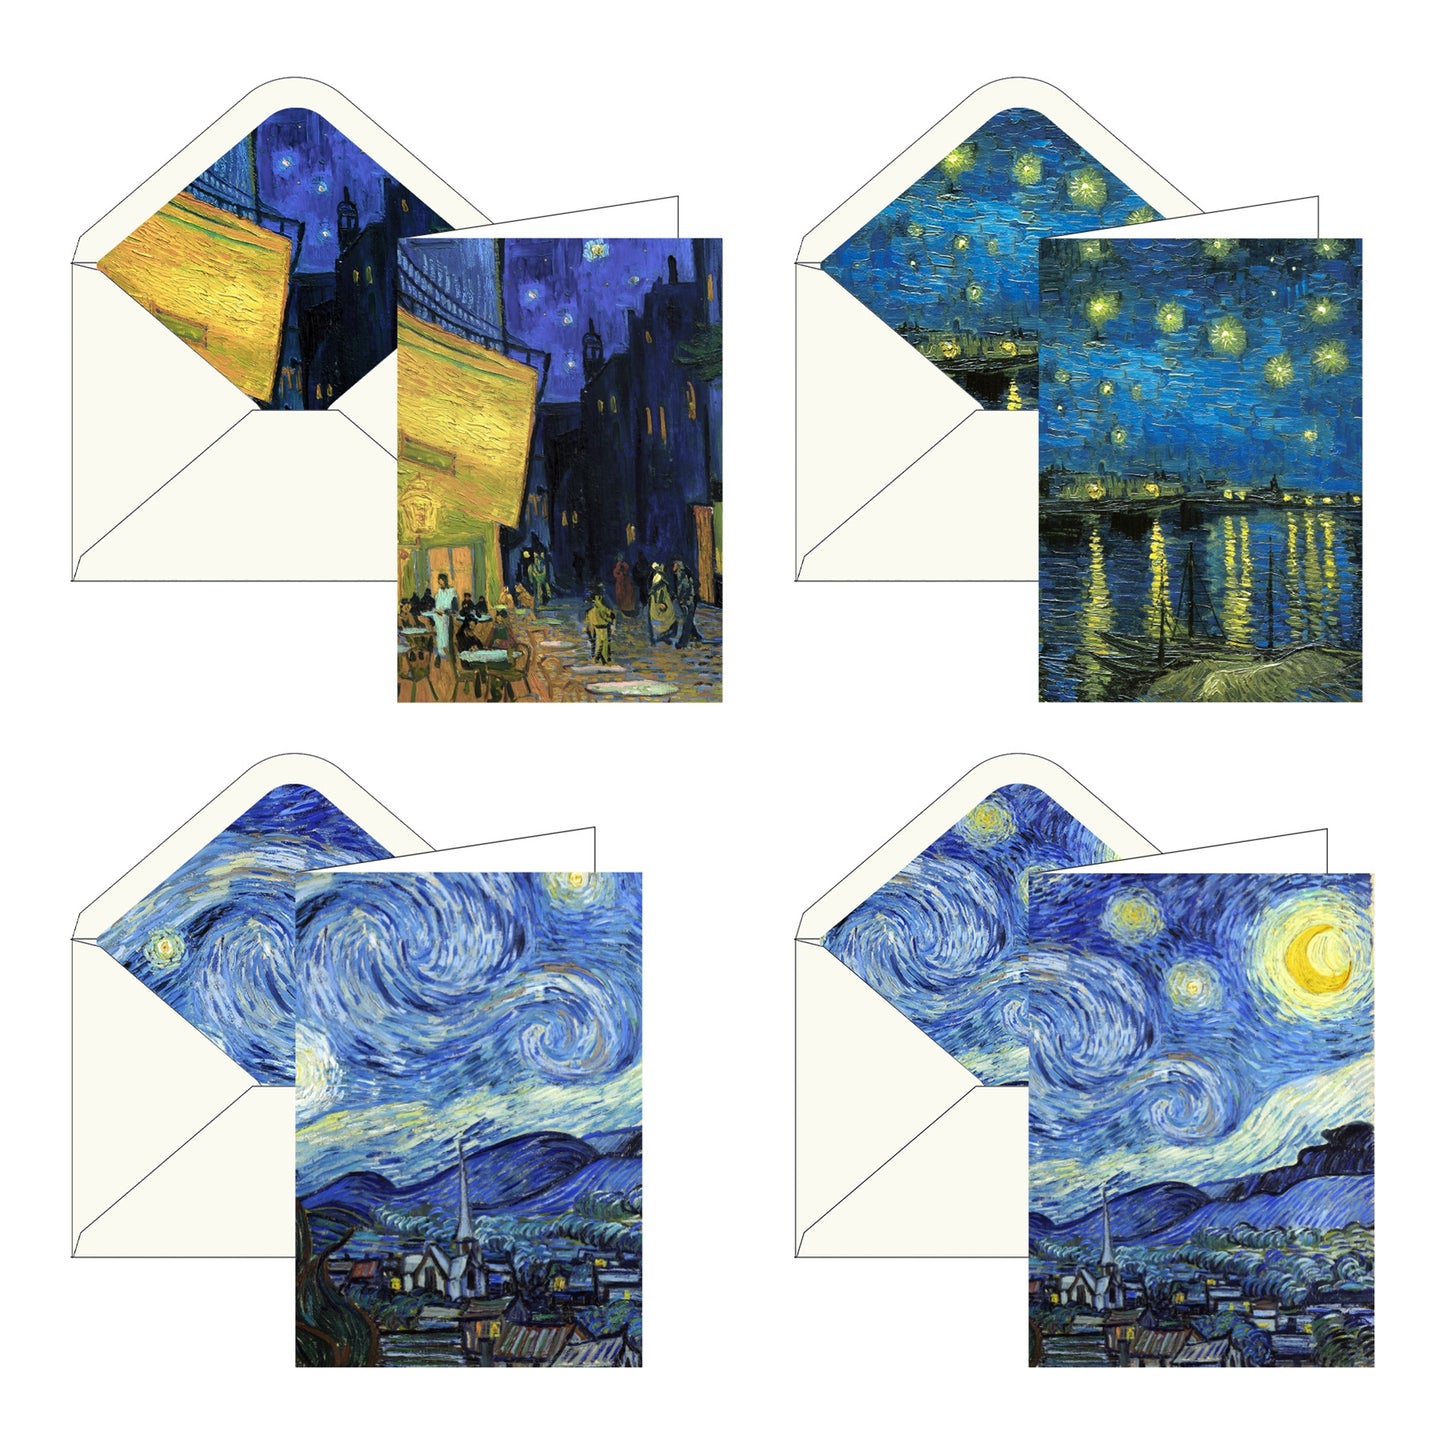 Verpackte Notizkarten: Vincent van Gogh bei Nacht